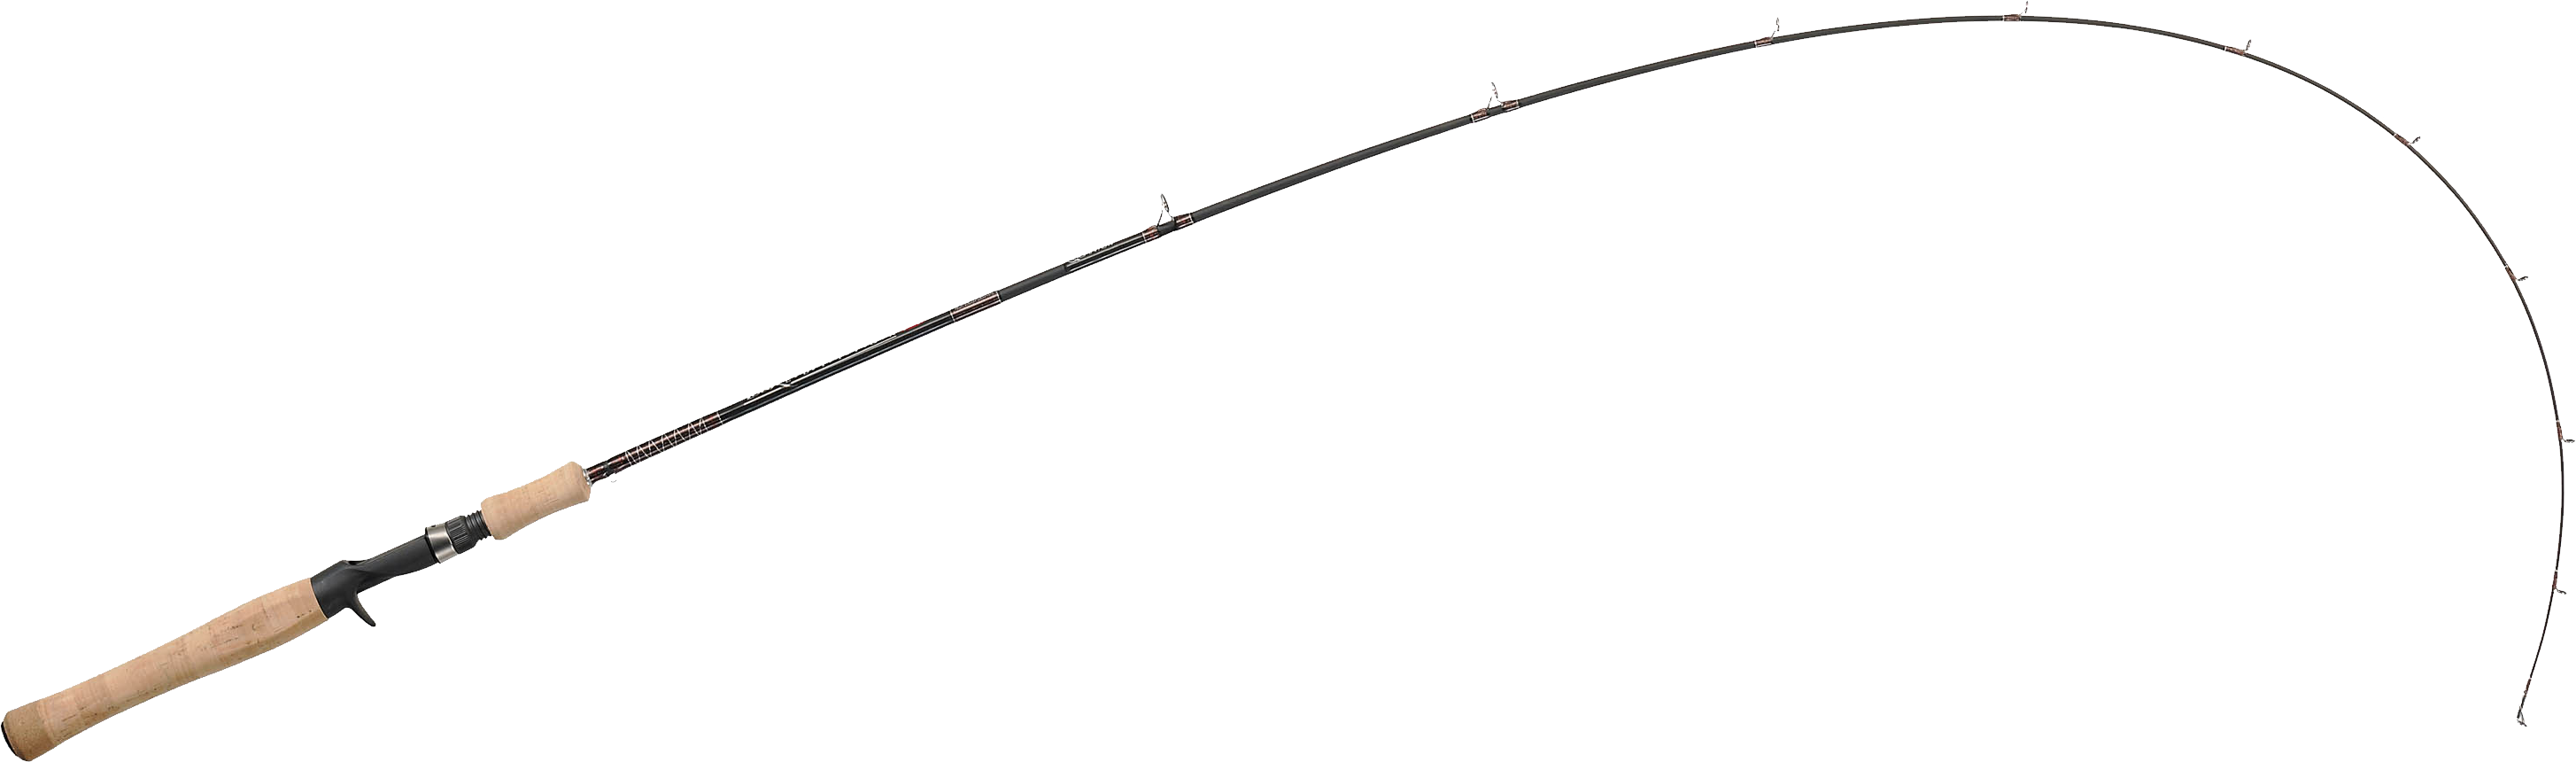 Stick Fishing Pole Rod Transparent PNG